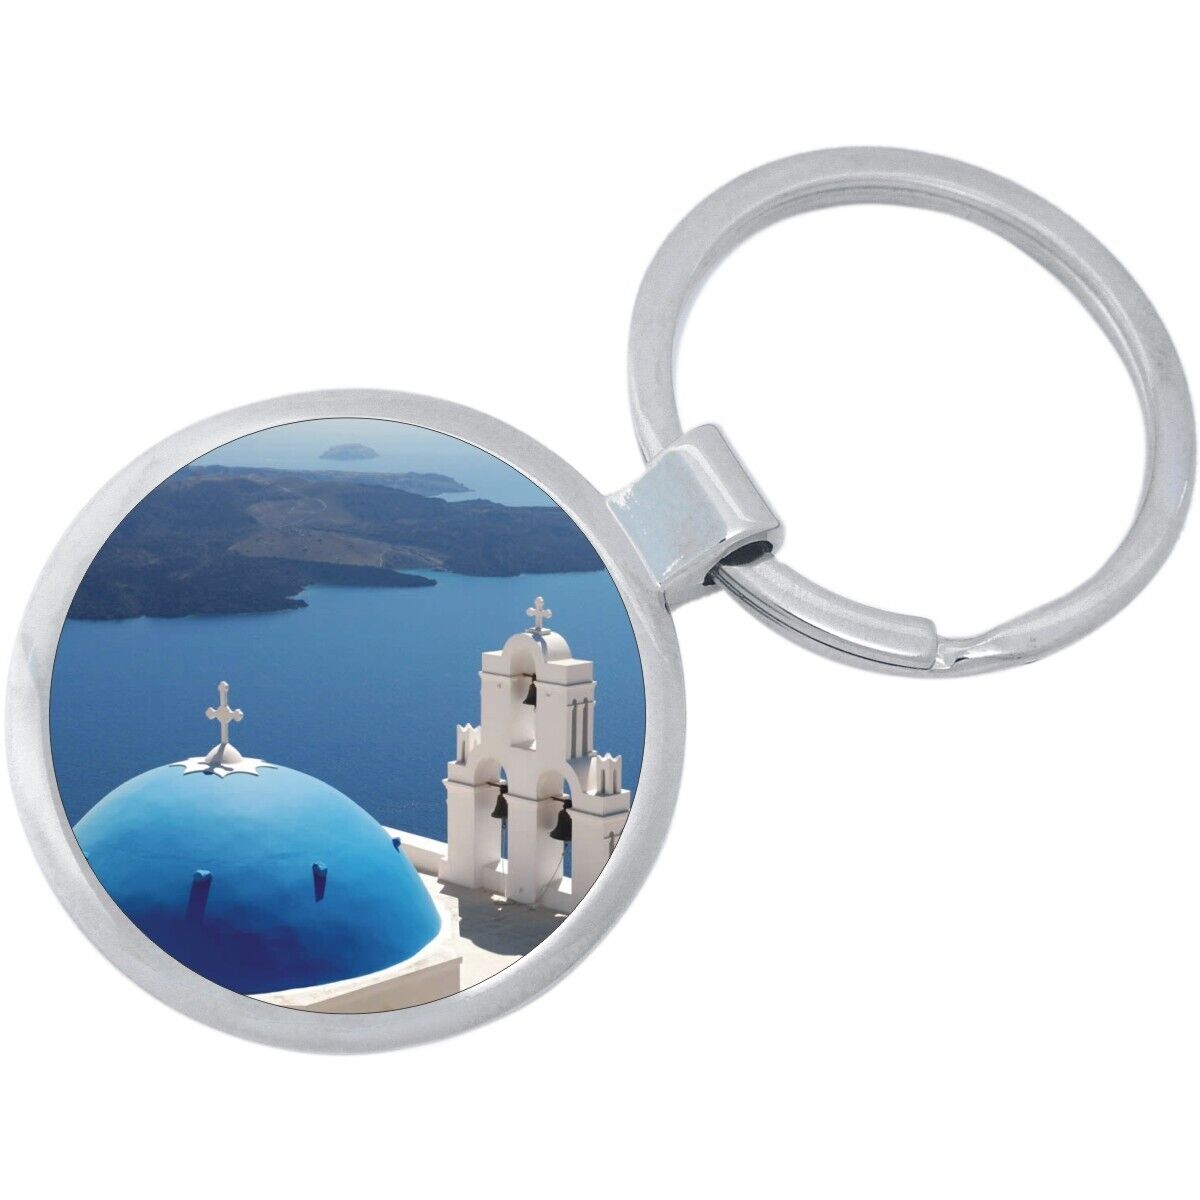 Santorini Greece Keychain - Includes 1.25 Inch Loop for Keys or Backpack